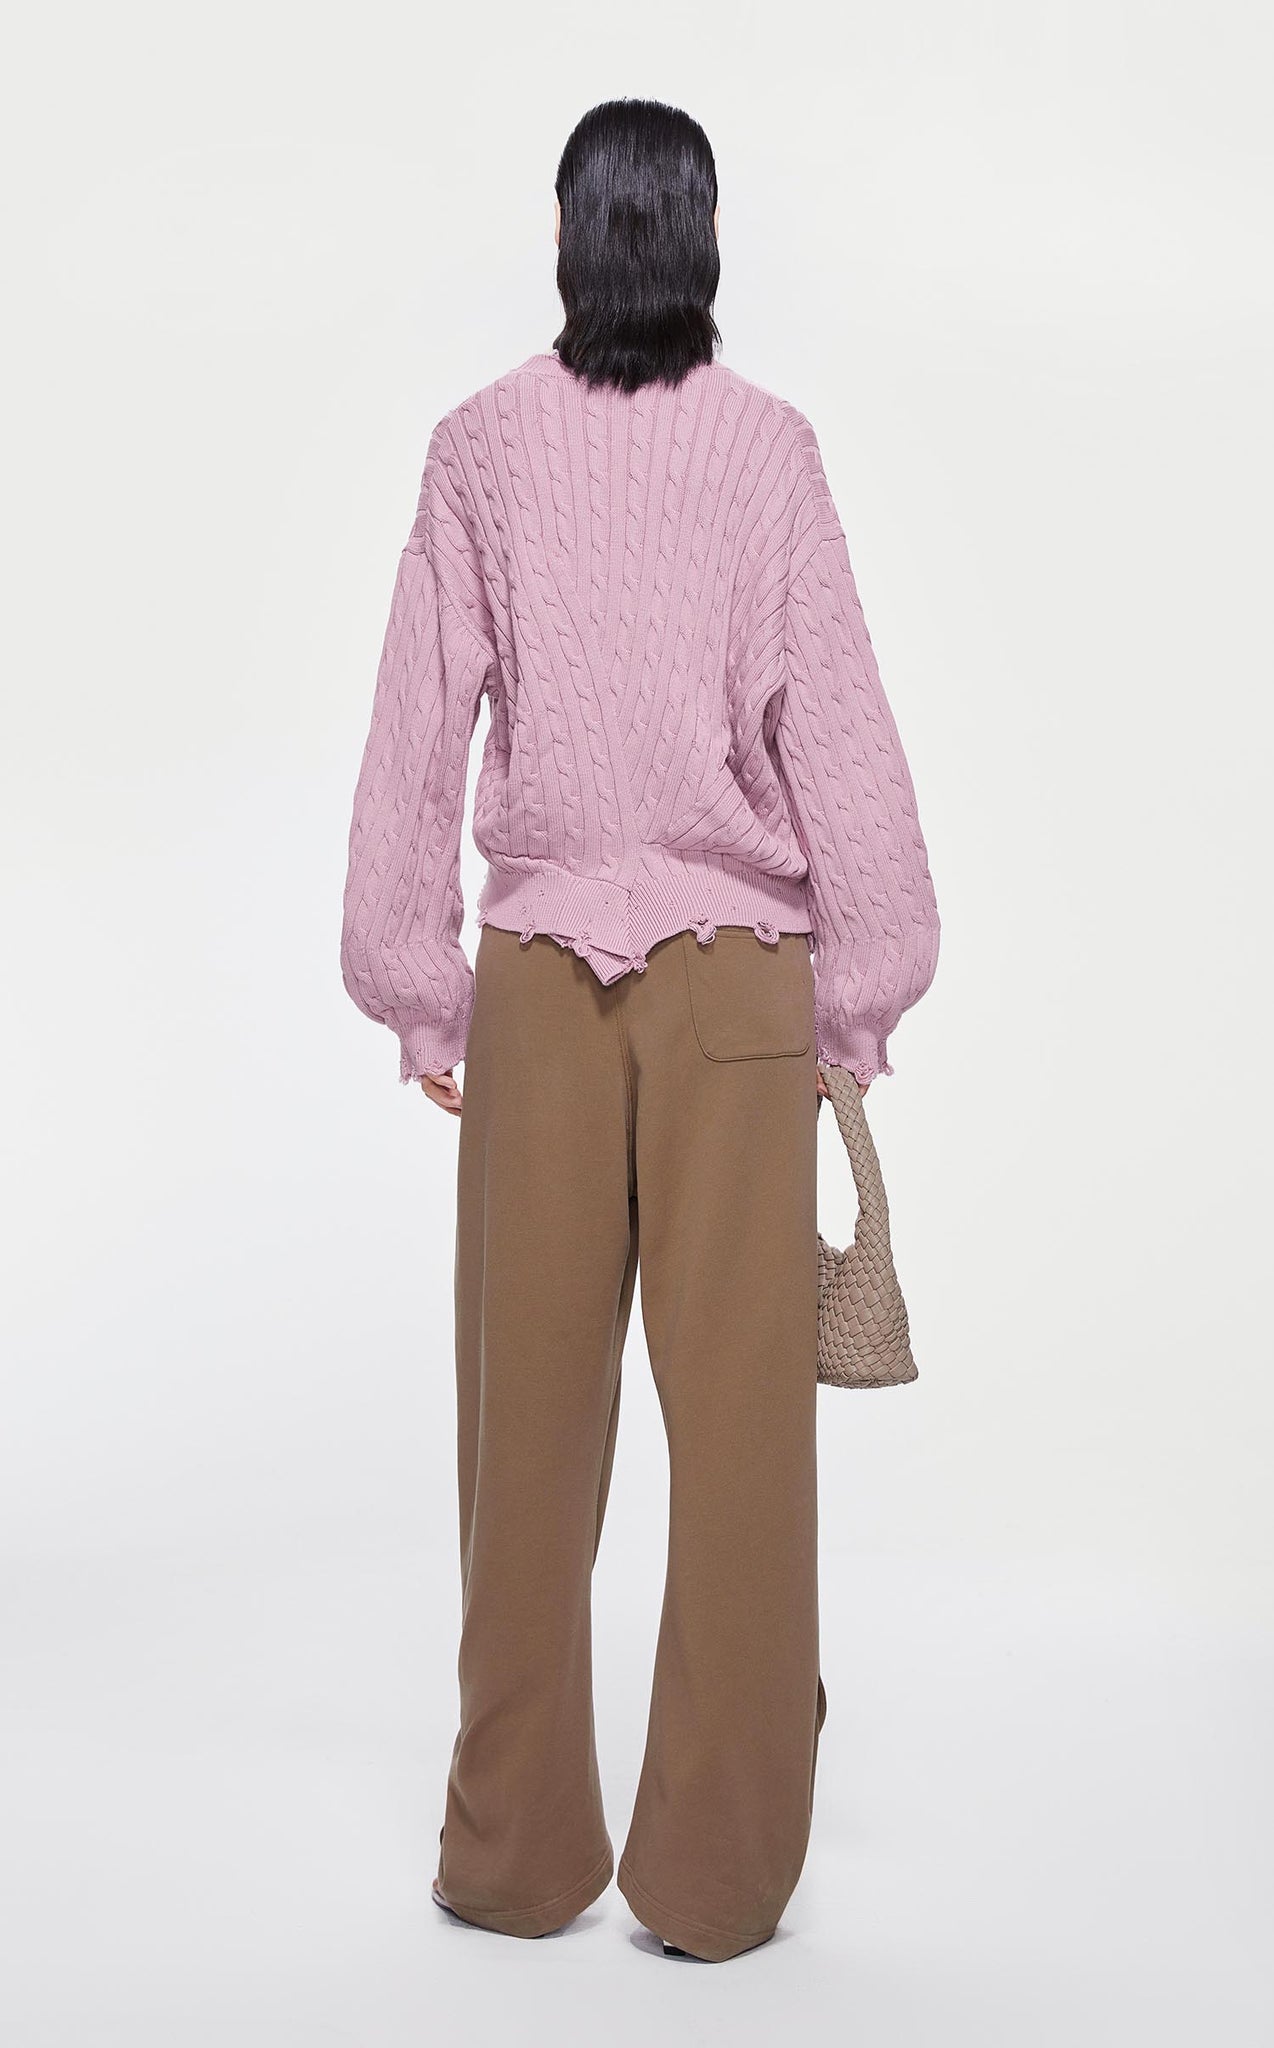 Sweater / JNBY Irregular Hem Crewneck Pullover